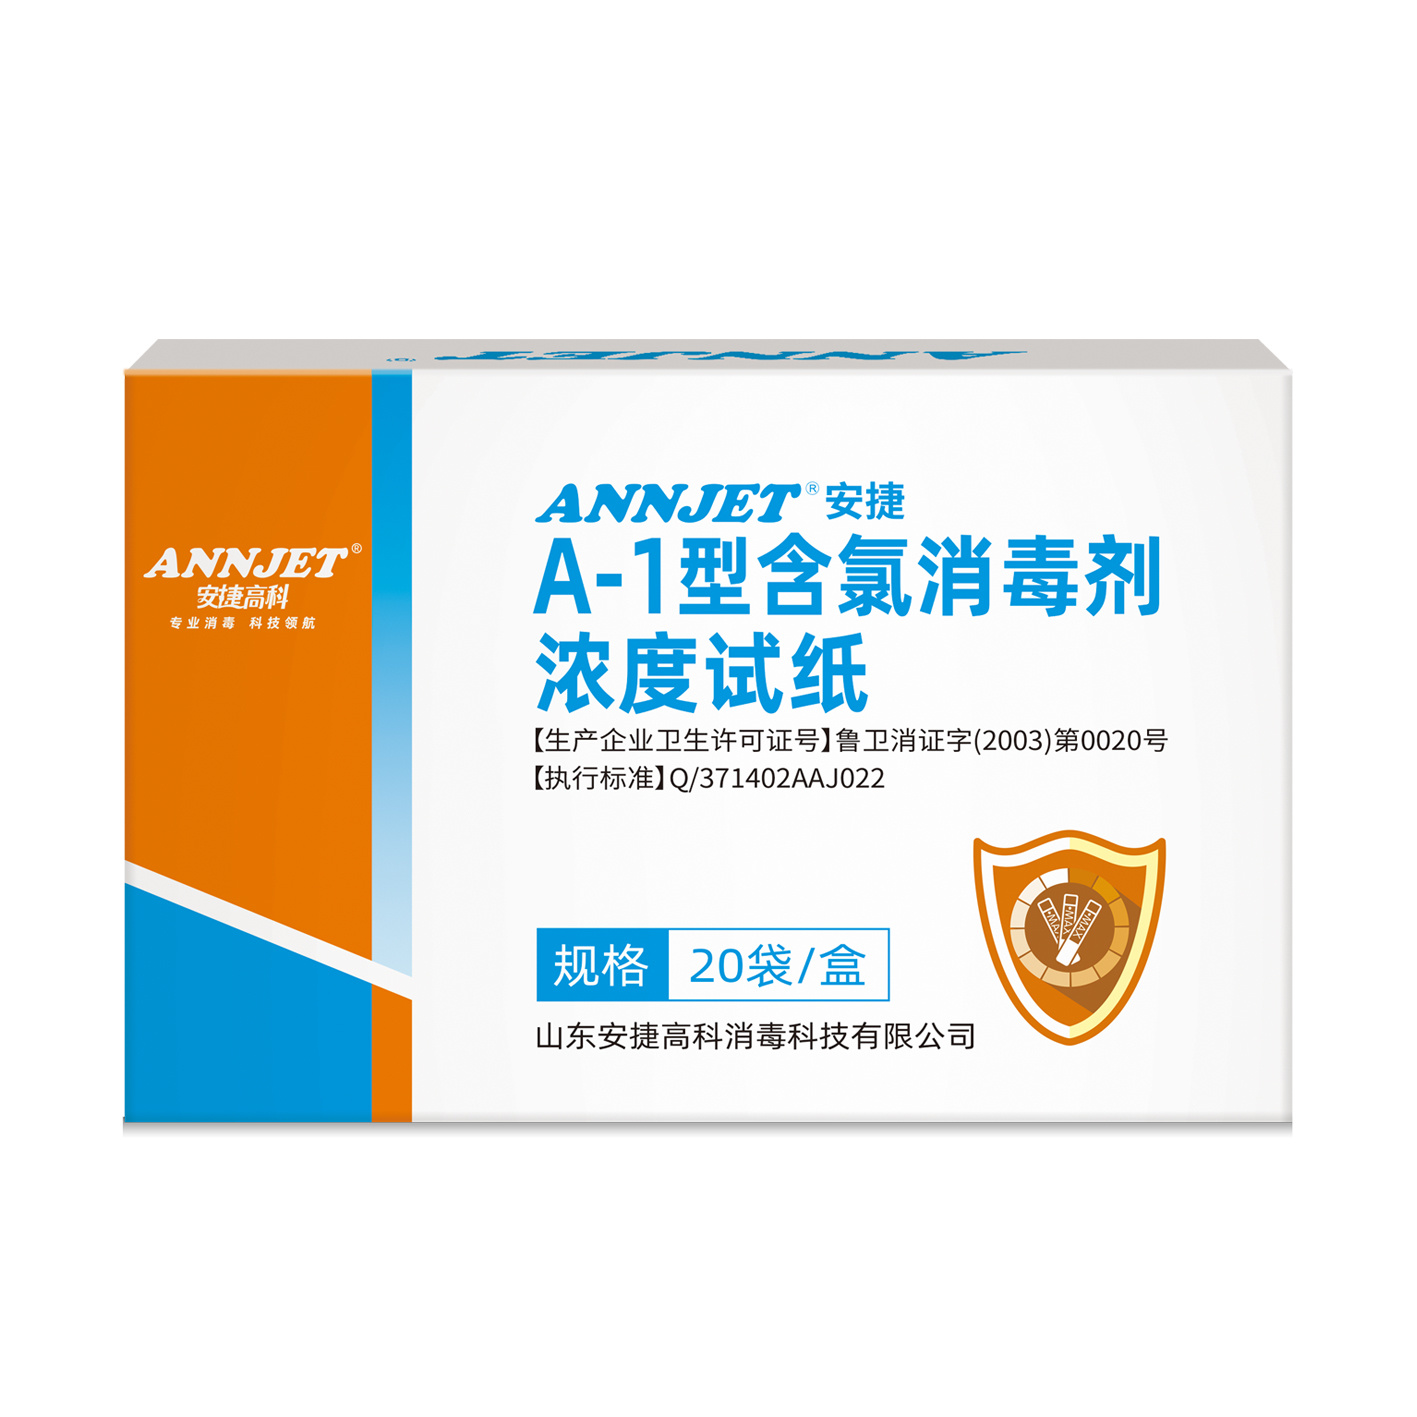 ANNJET安捷A-1型含氯消毒剂浓度试纸